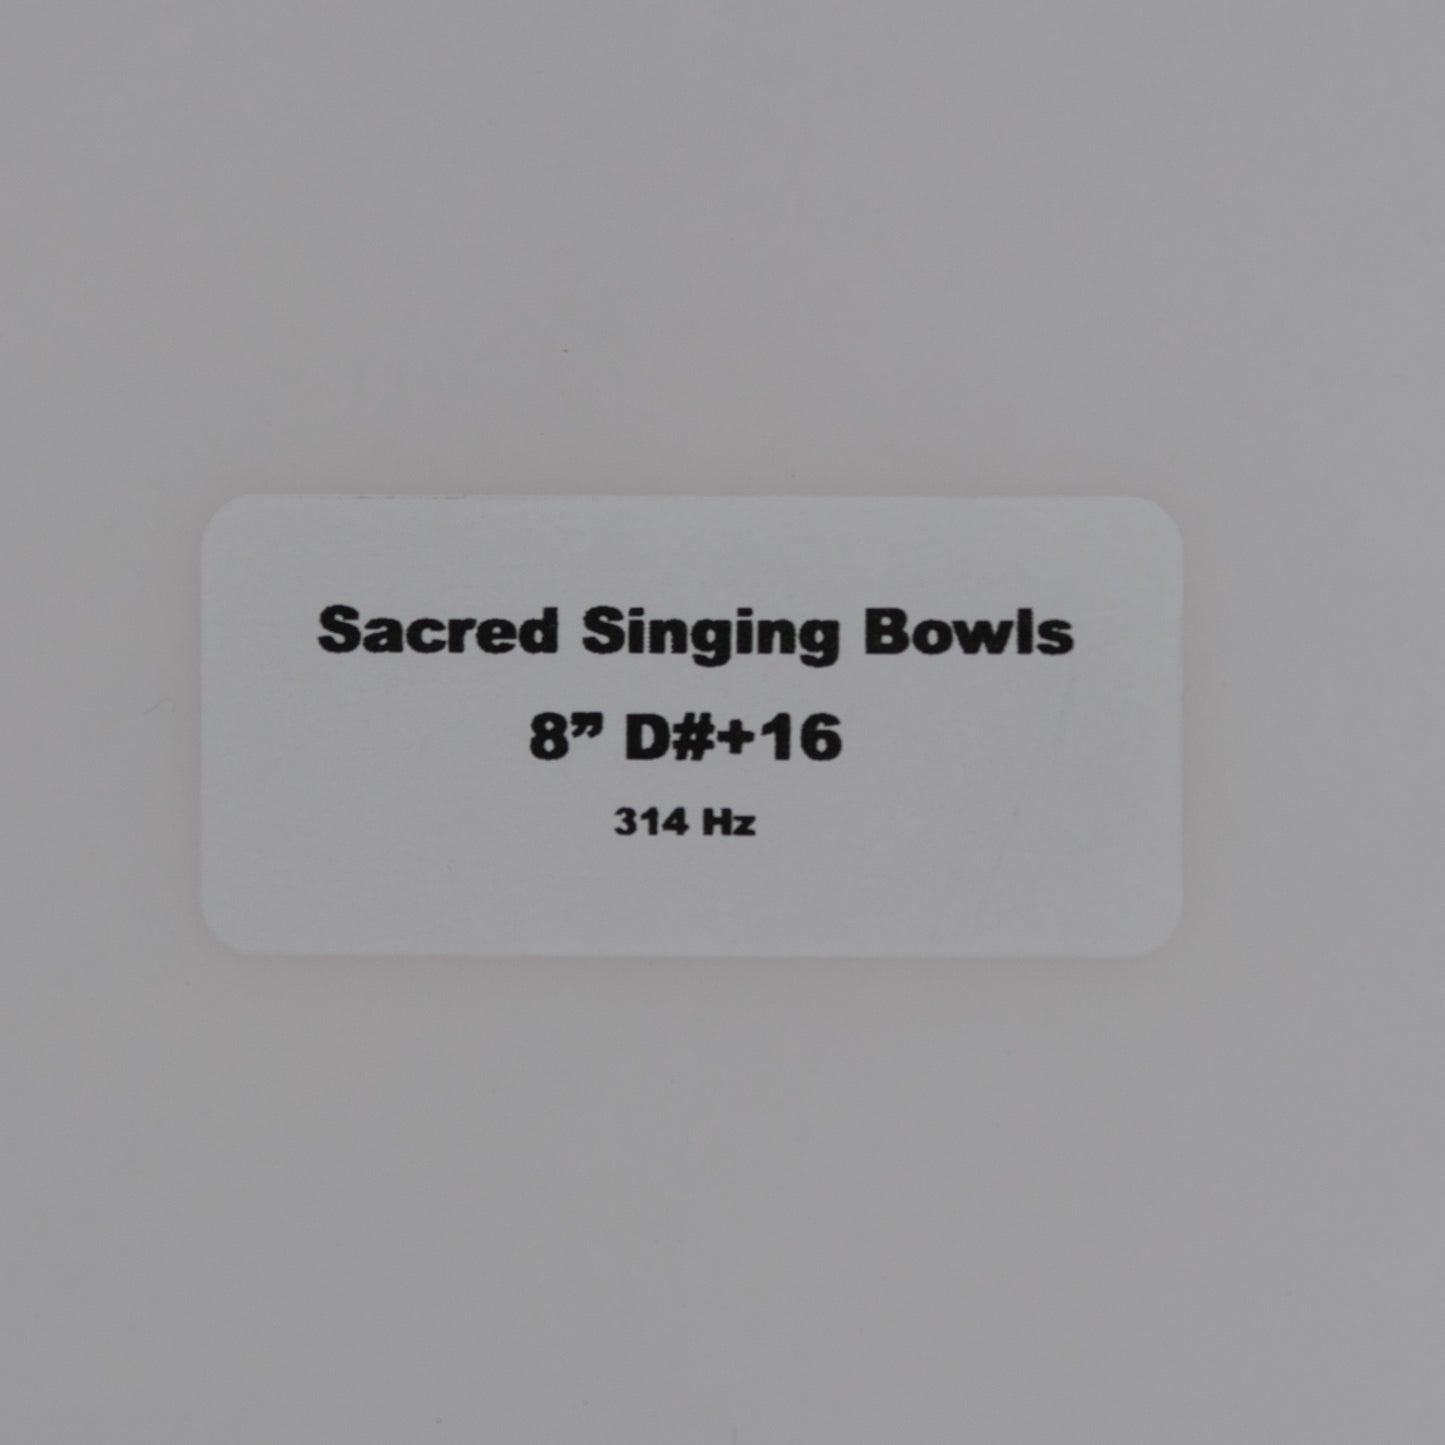 8" D#+16 White Light Quartz Crystal Singing Bowl, Sacred Singing Bowls